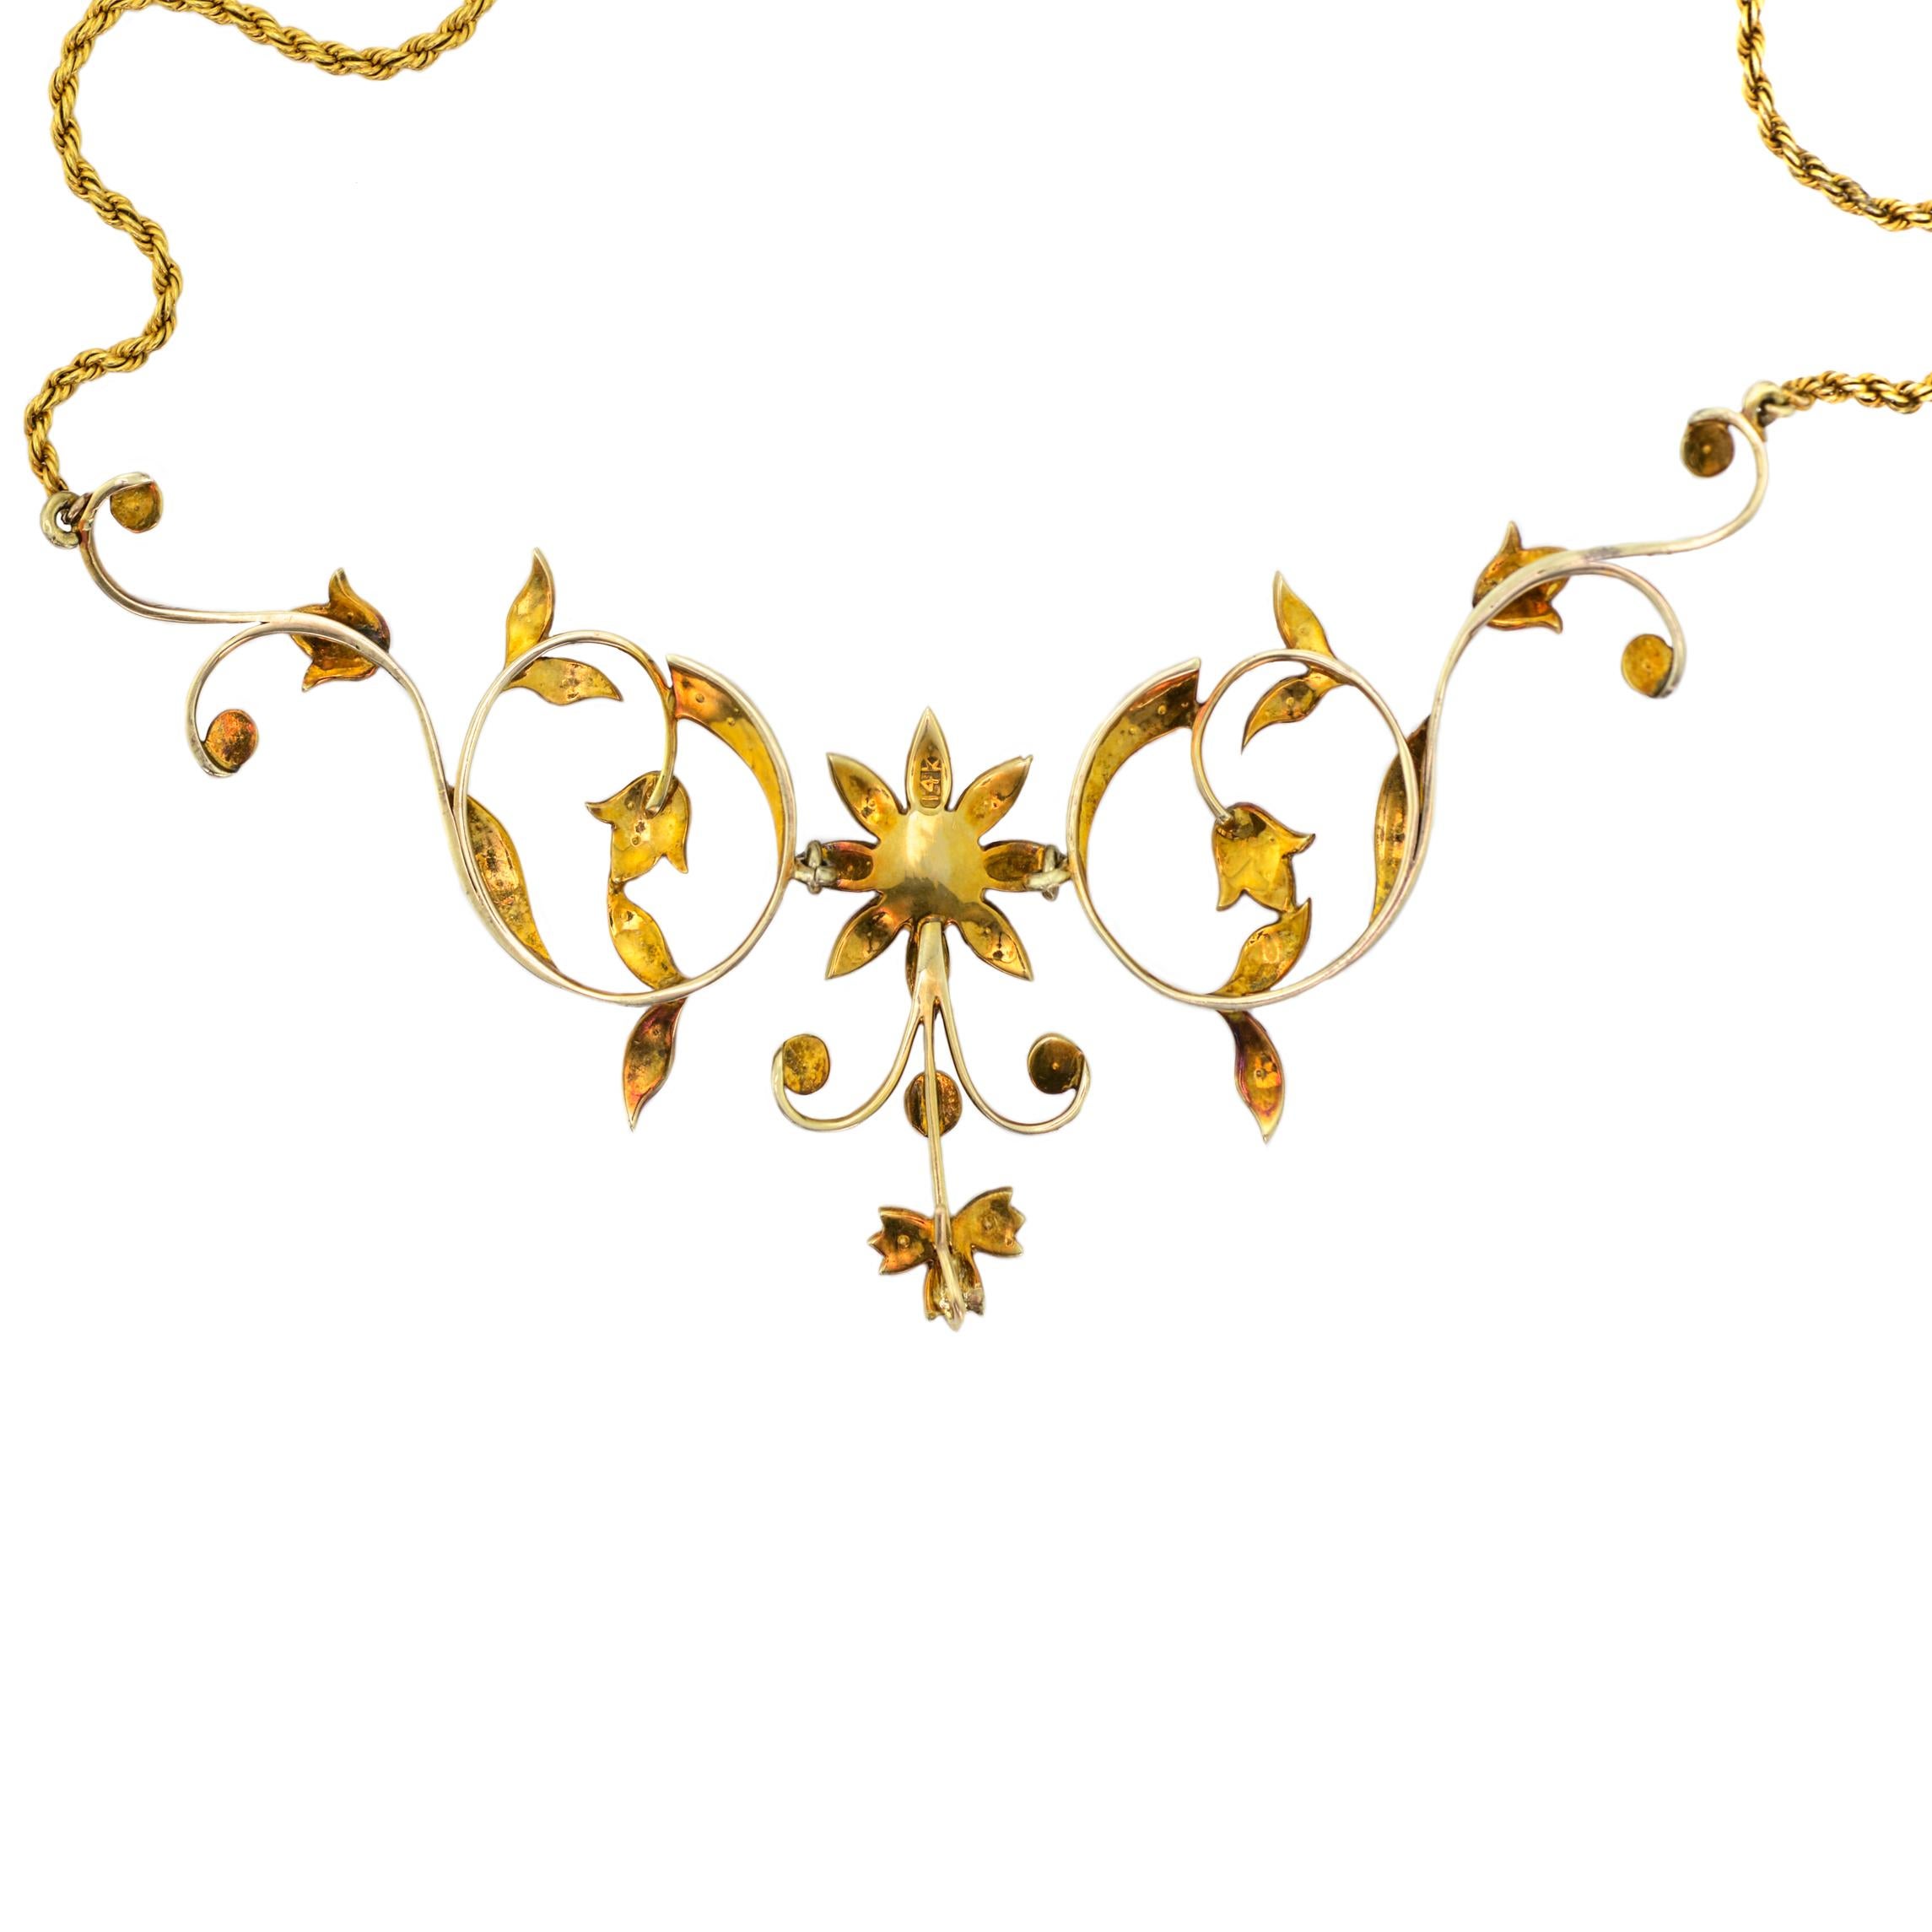 Splendid Antique Edwardian 14 Karat Yellow Gold Pearl Floral Necklace For Sale 1